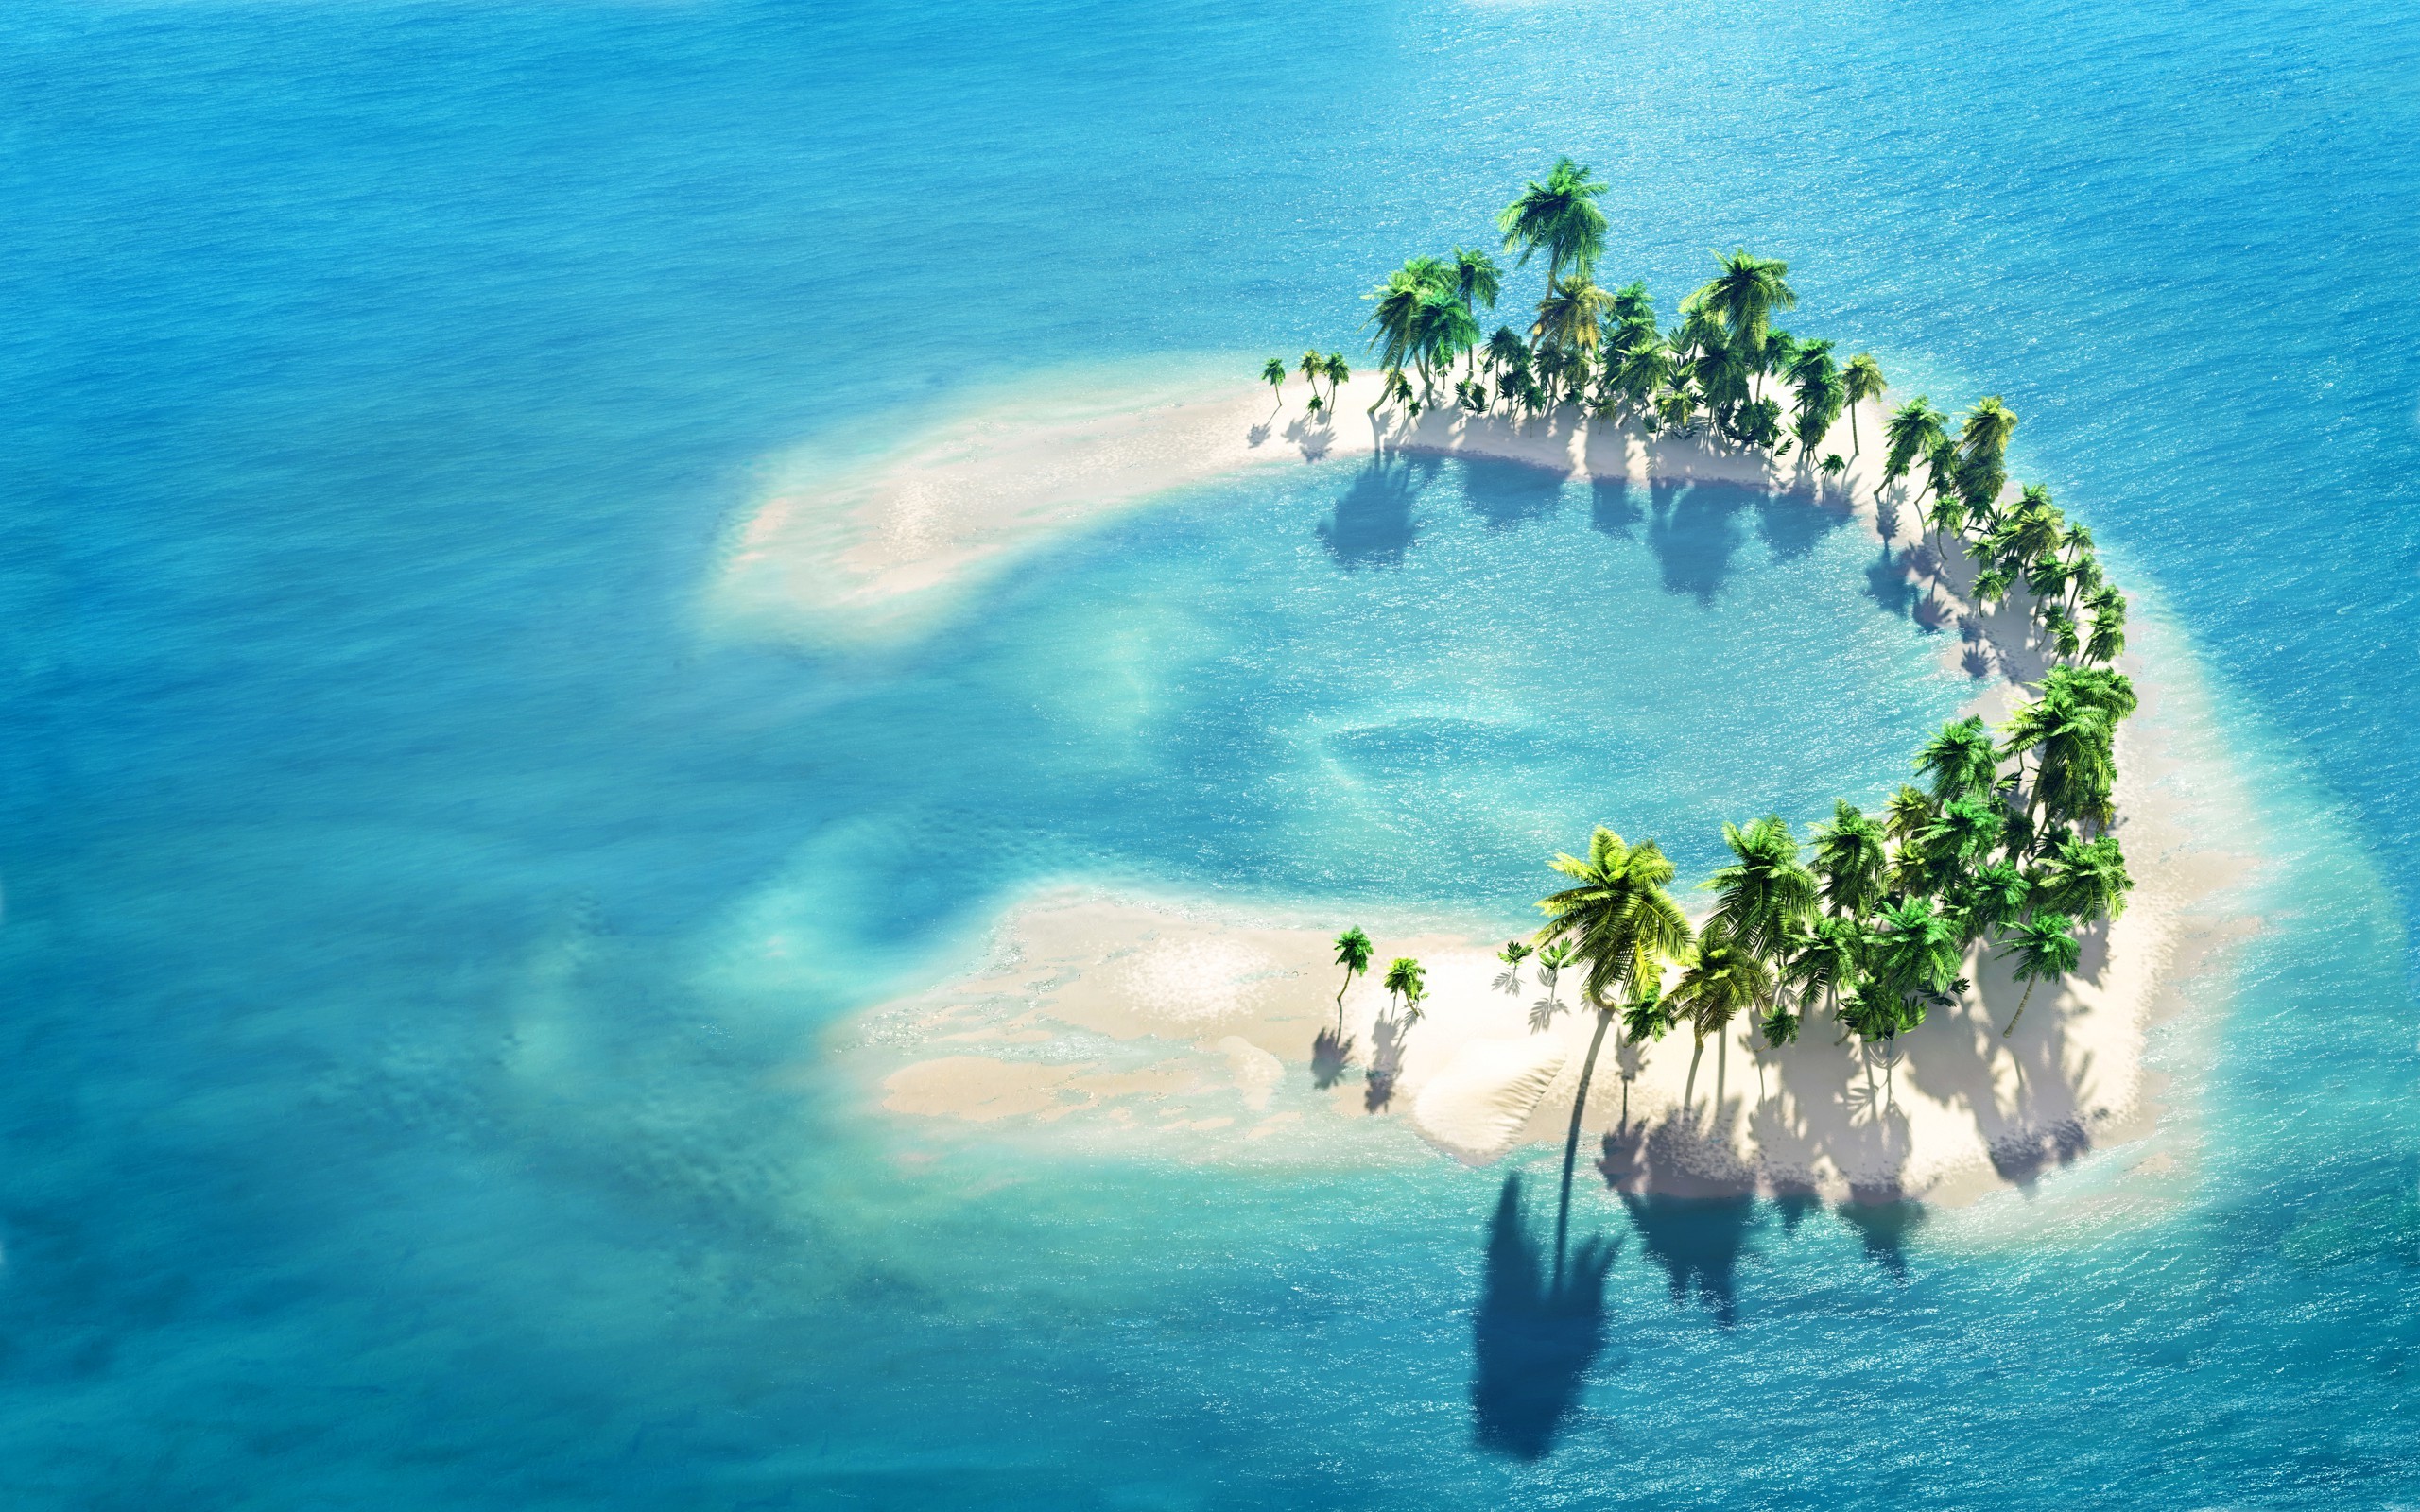 General 2560x1600 island sea palm trees digital art artwork sunlight tropic island tropical aerial view bright cyan coast water nature turquoise